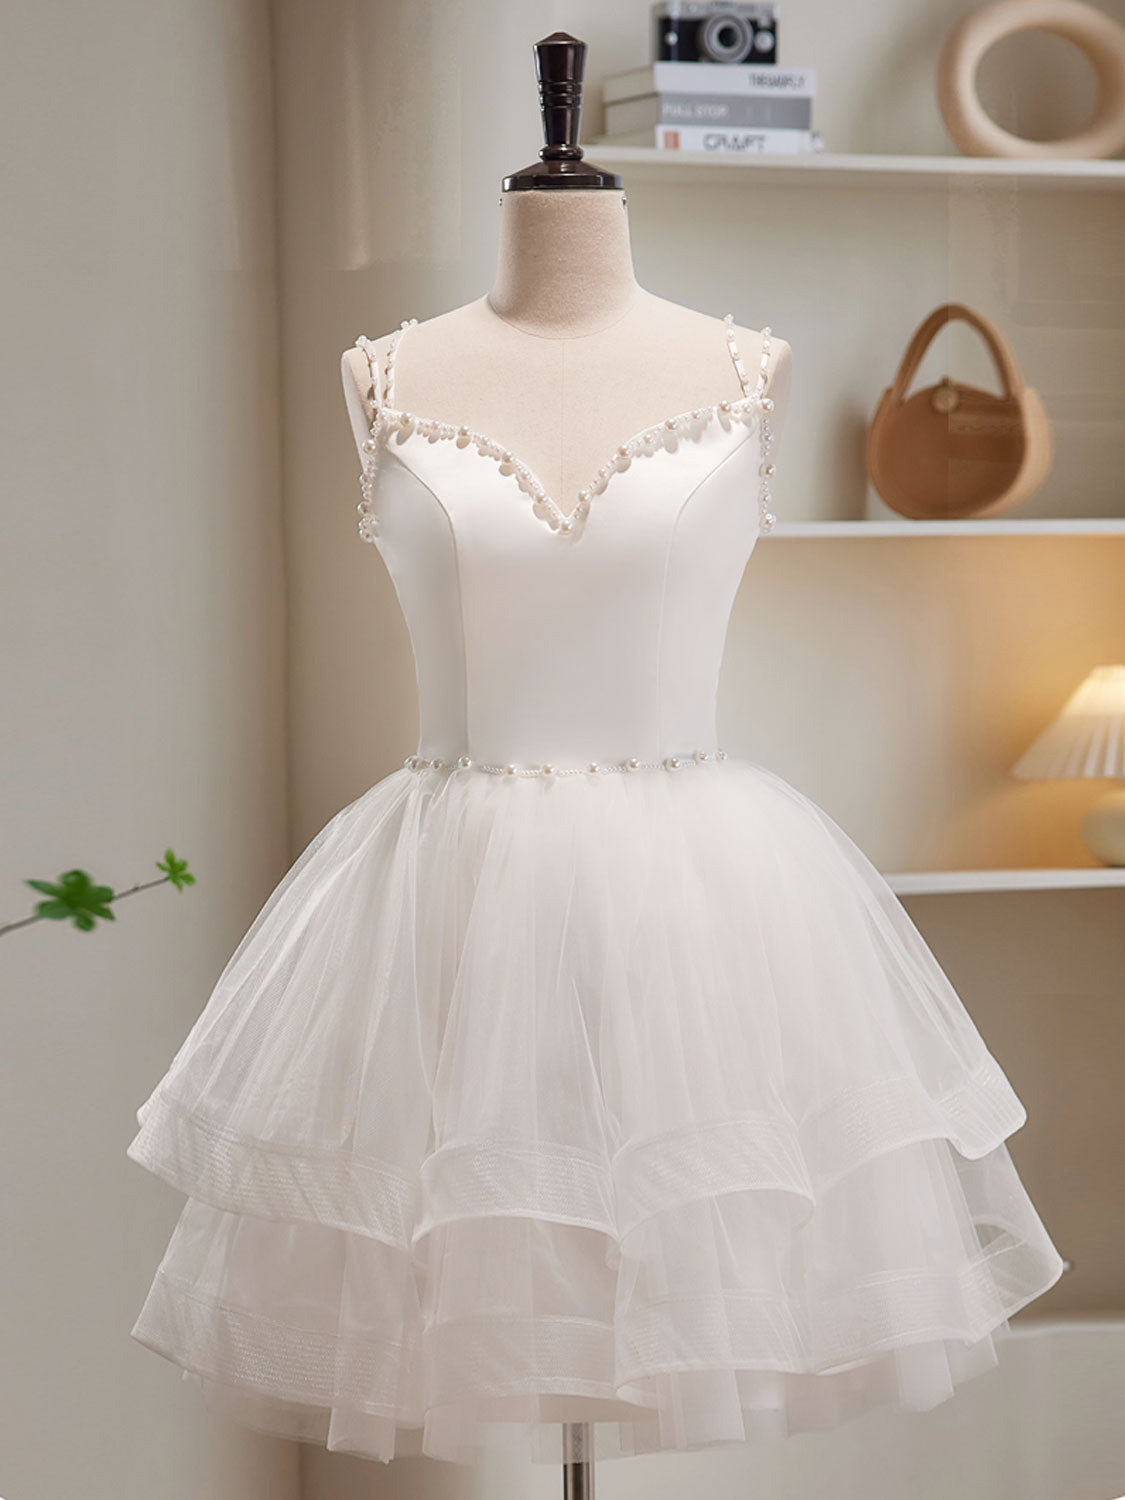 White Tulle Short Corset Prom Dresses, Cute White Puffy Corset Homecoming Dresses outfit, Prom Dressed 2033